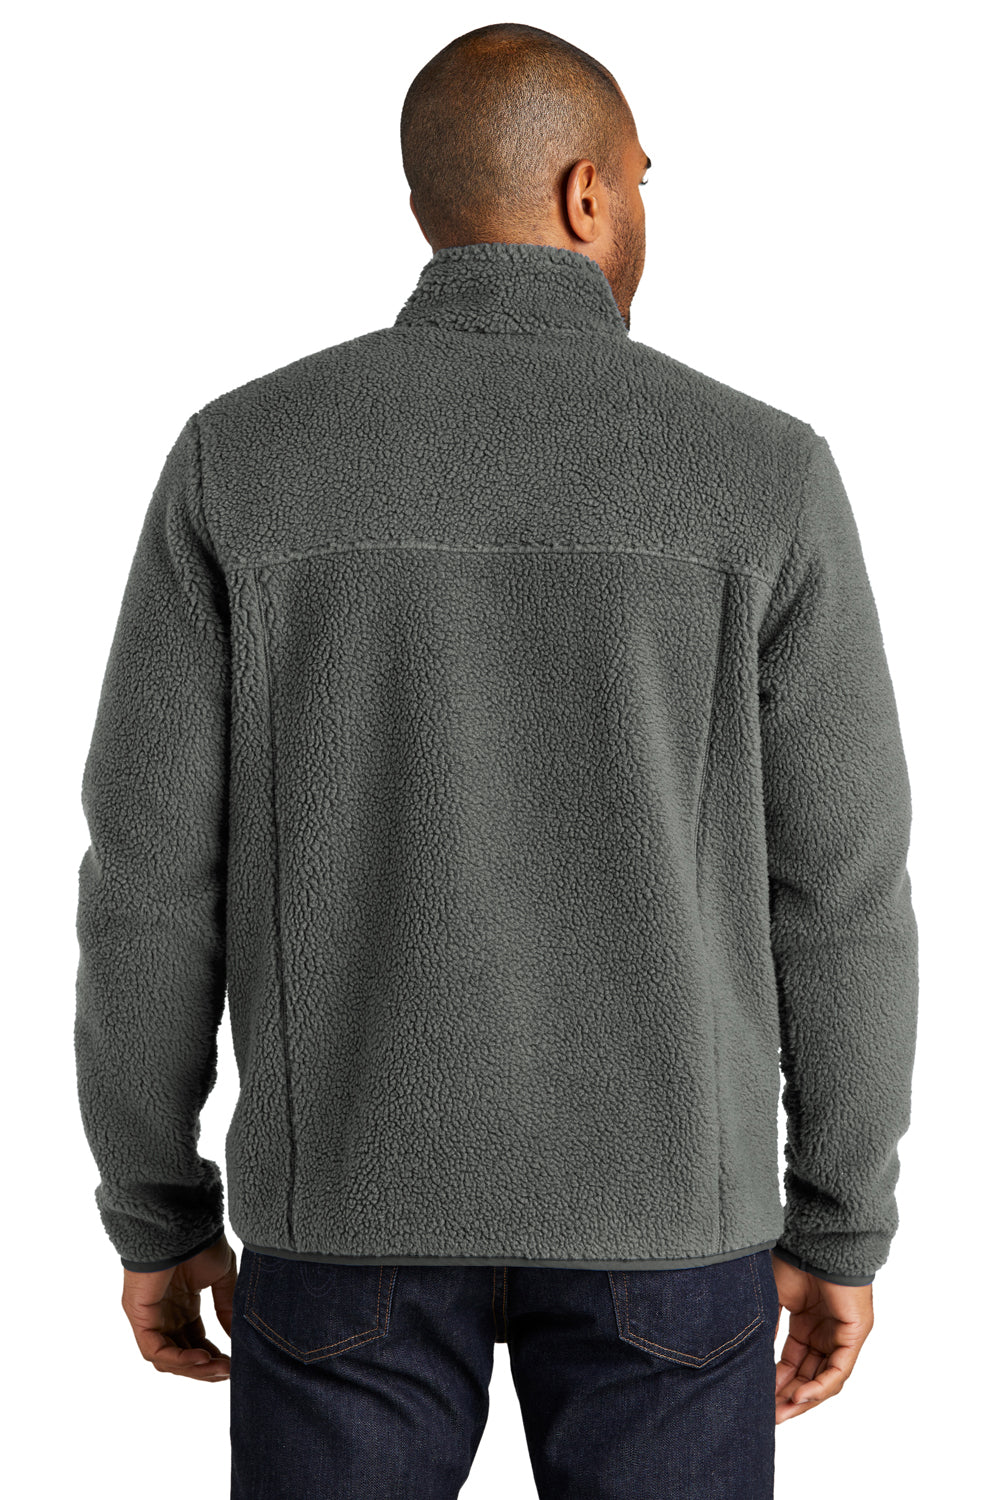 Port Authority F140 Camp Fleece 1/4 Snap Sweatshirt Steel Grey Back